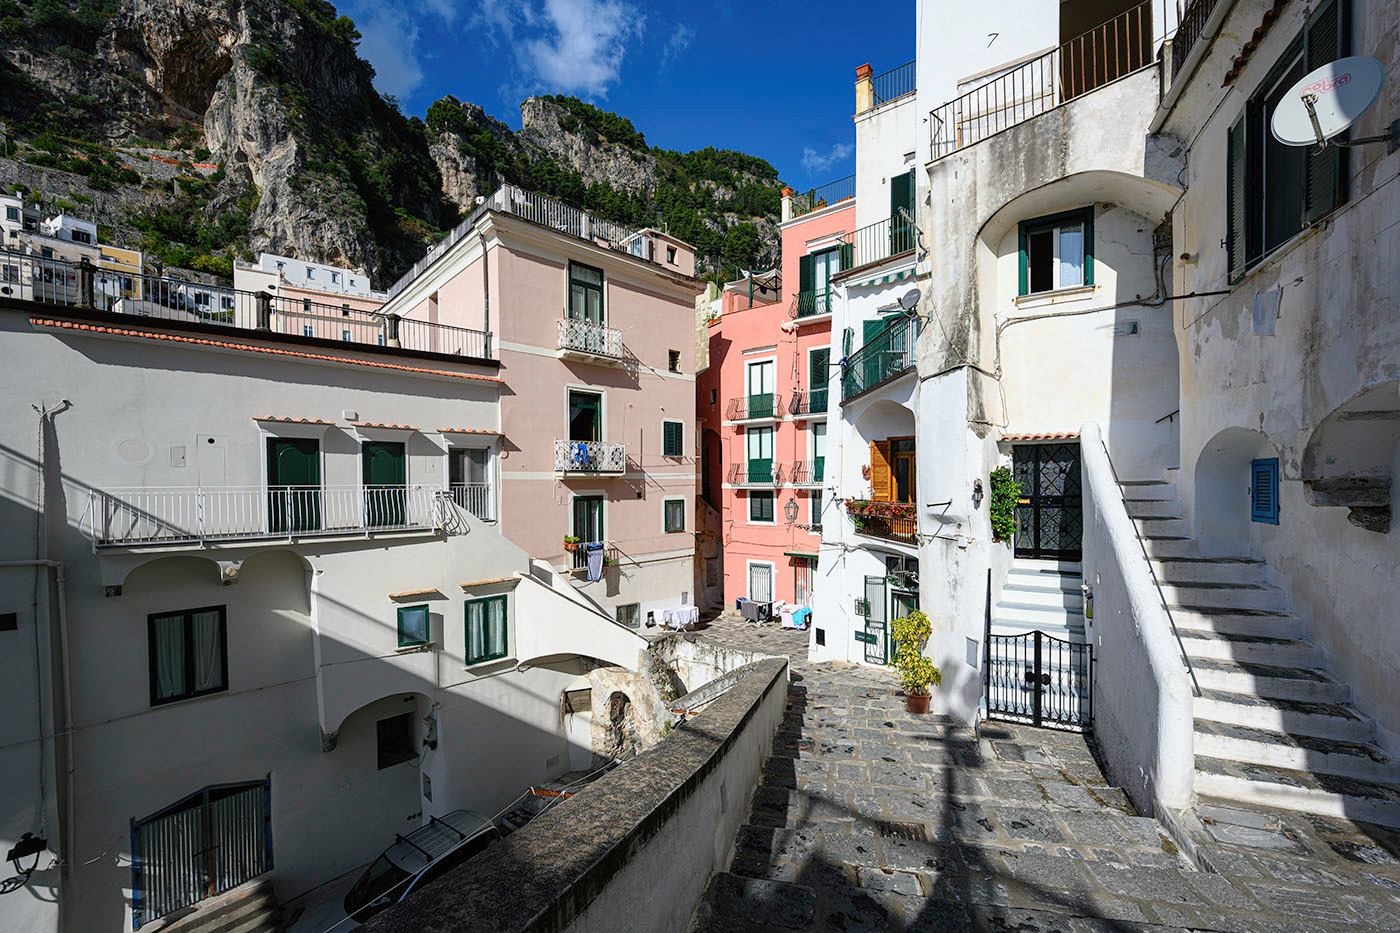 #Amalfi #Atrani #Italy